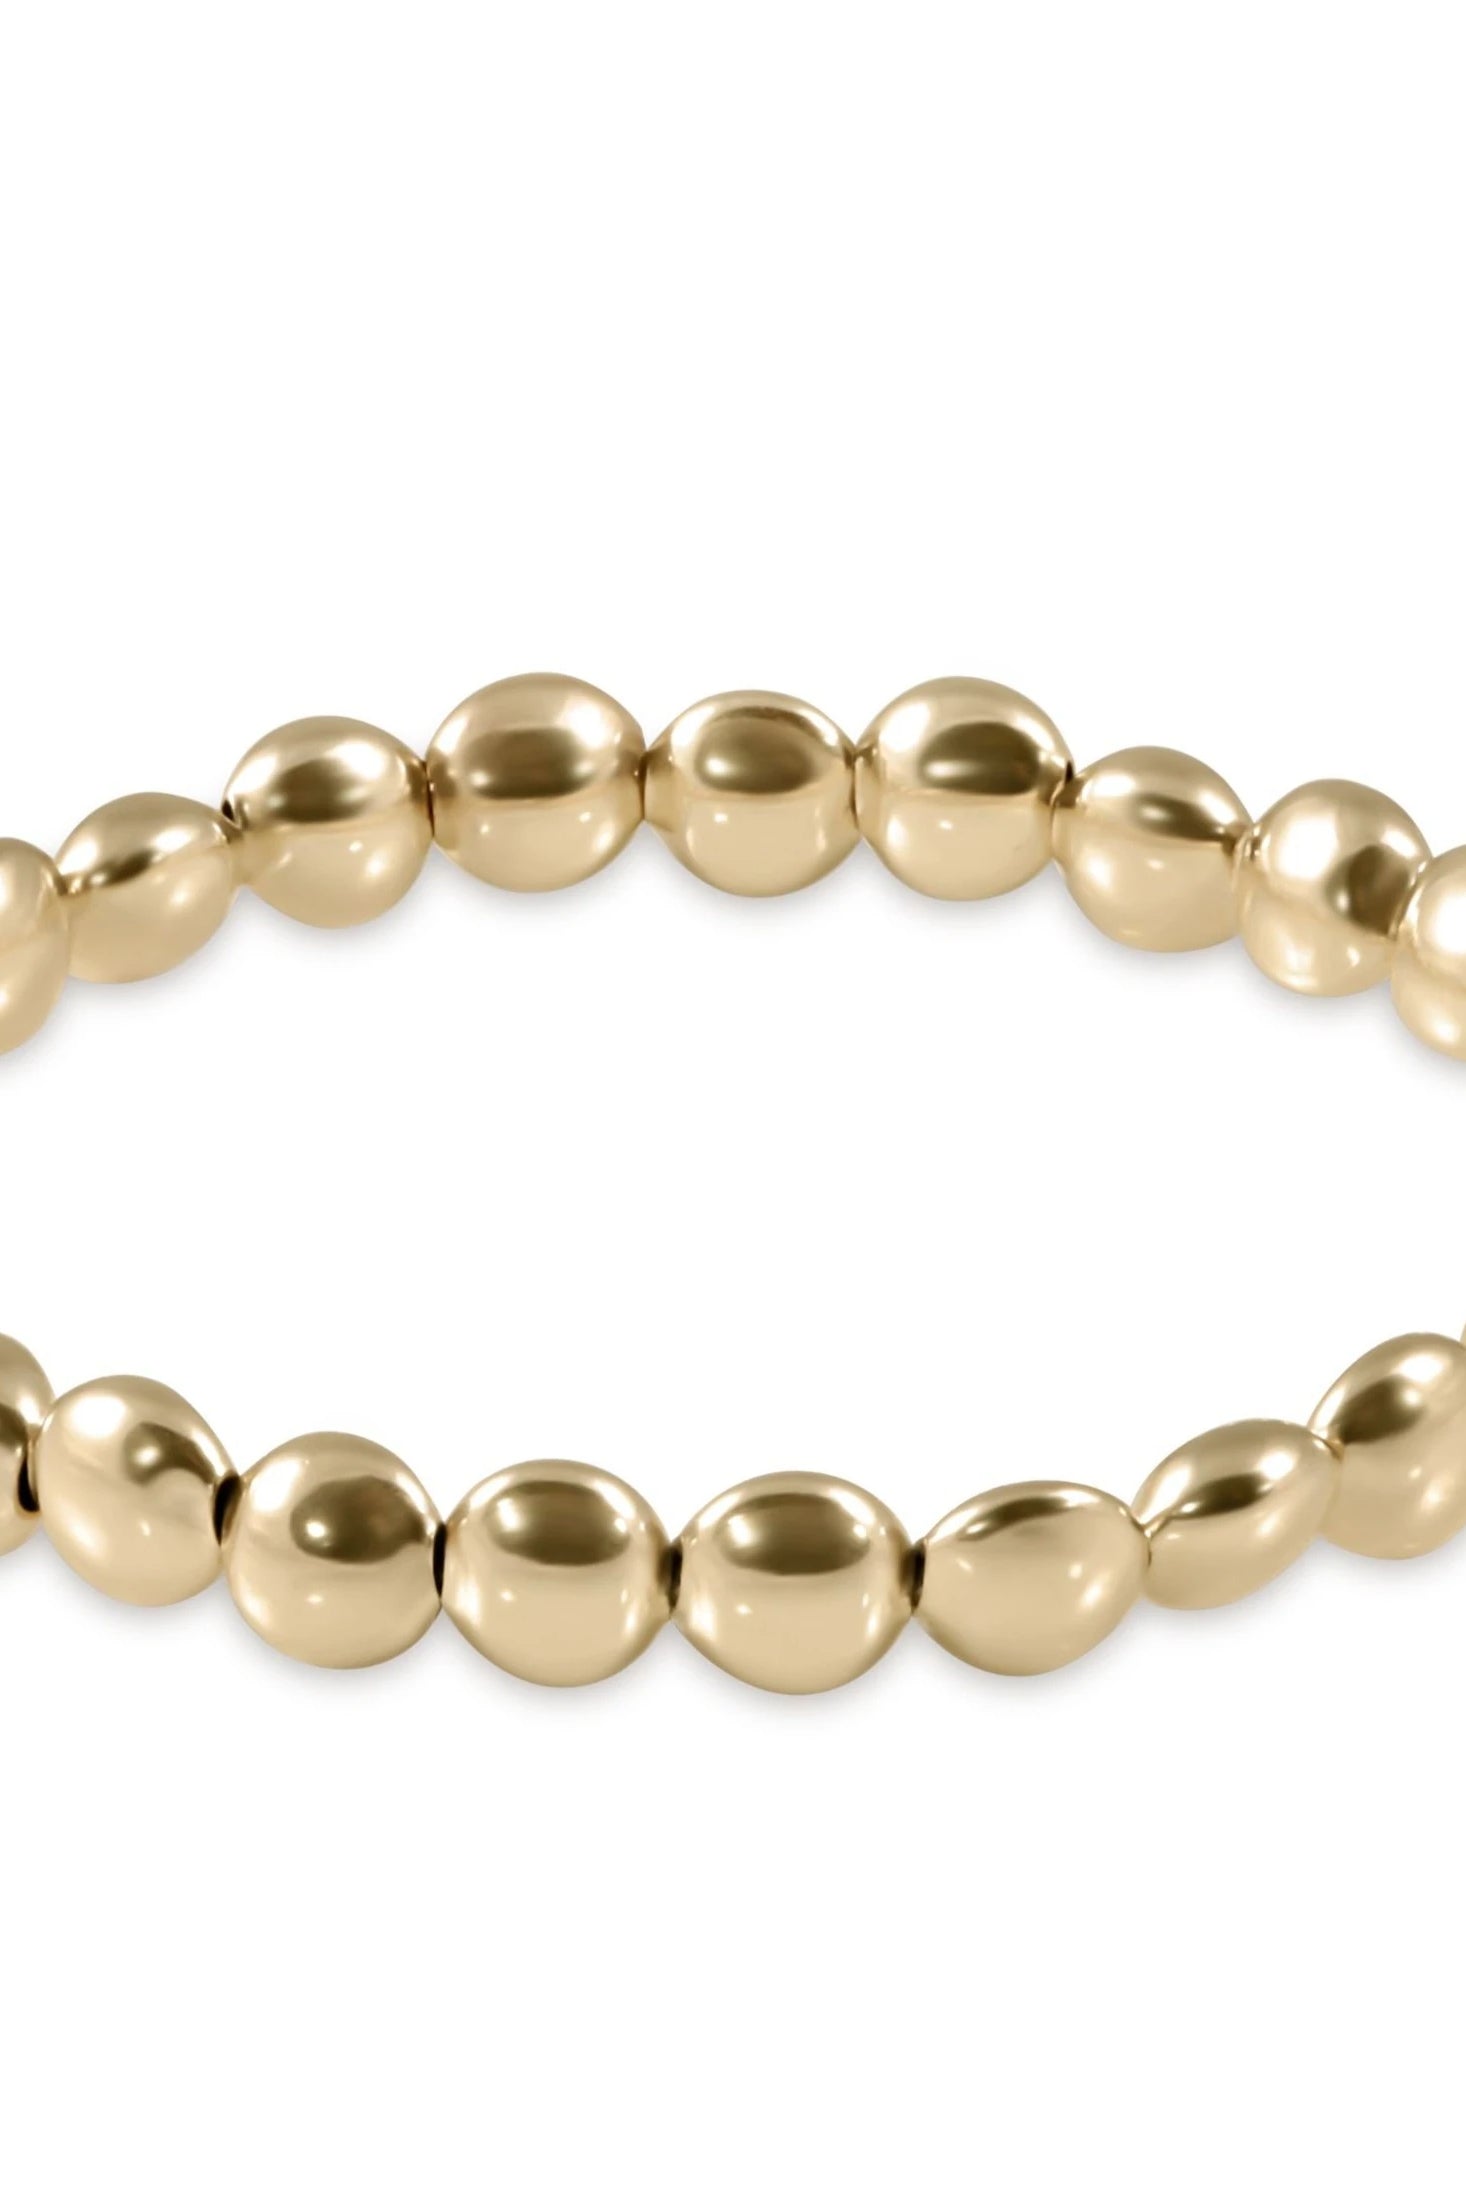 Honesty Gold 6mm Bracelet-Bracelets-eNewton-The Lovely Closet, Women's Fashion Boutique in Alexandria, KY